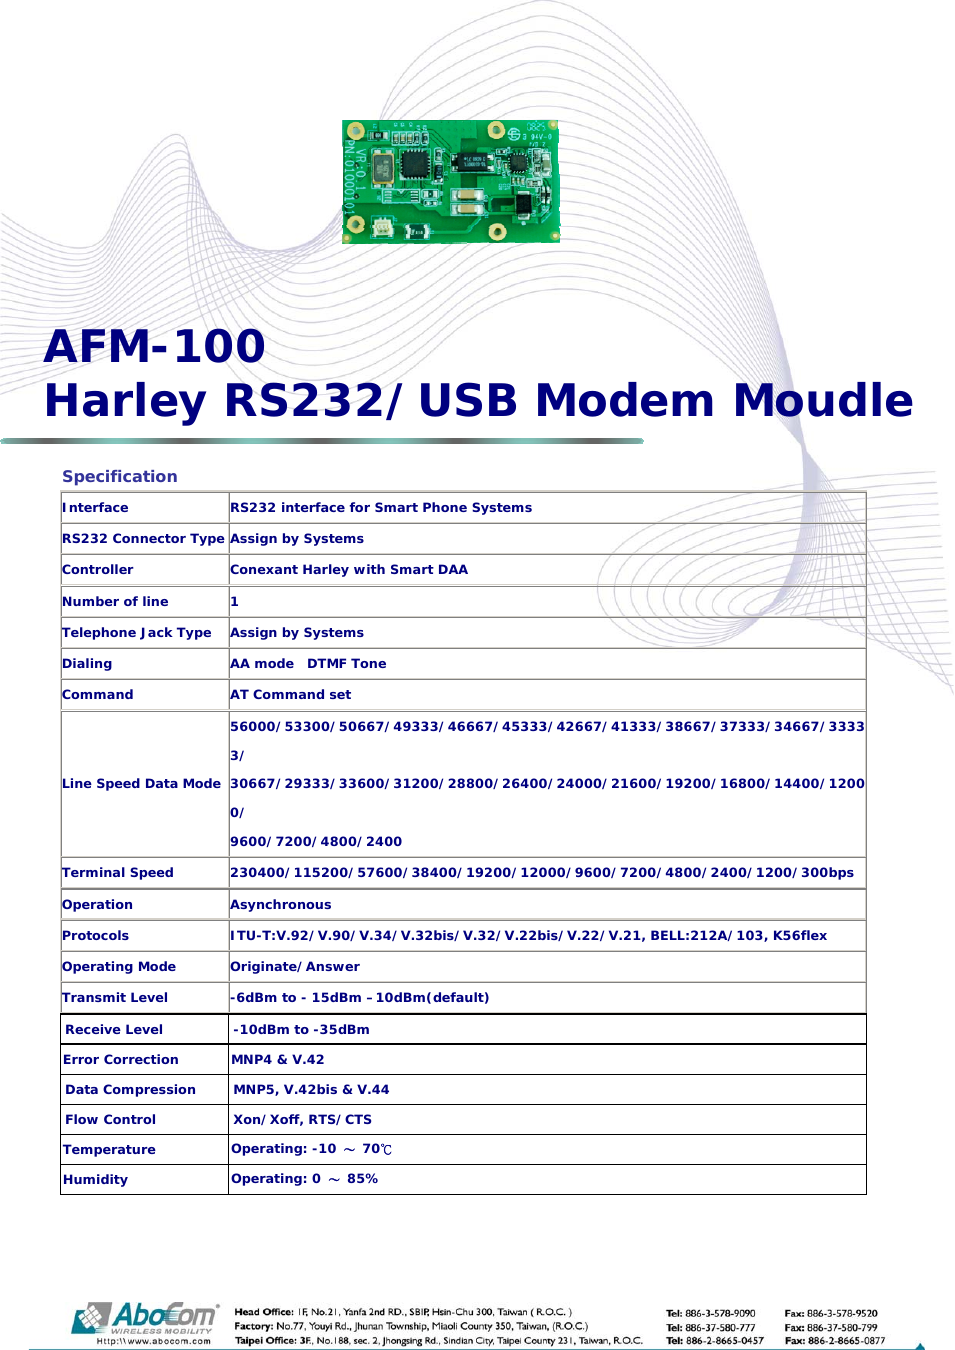 Harley RS232/USB Modem Moudle AFM-100